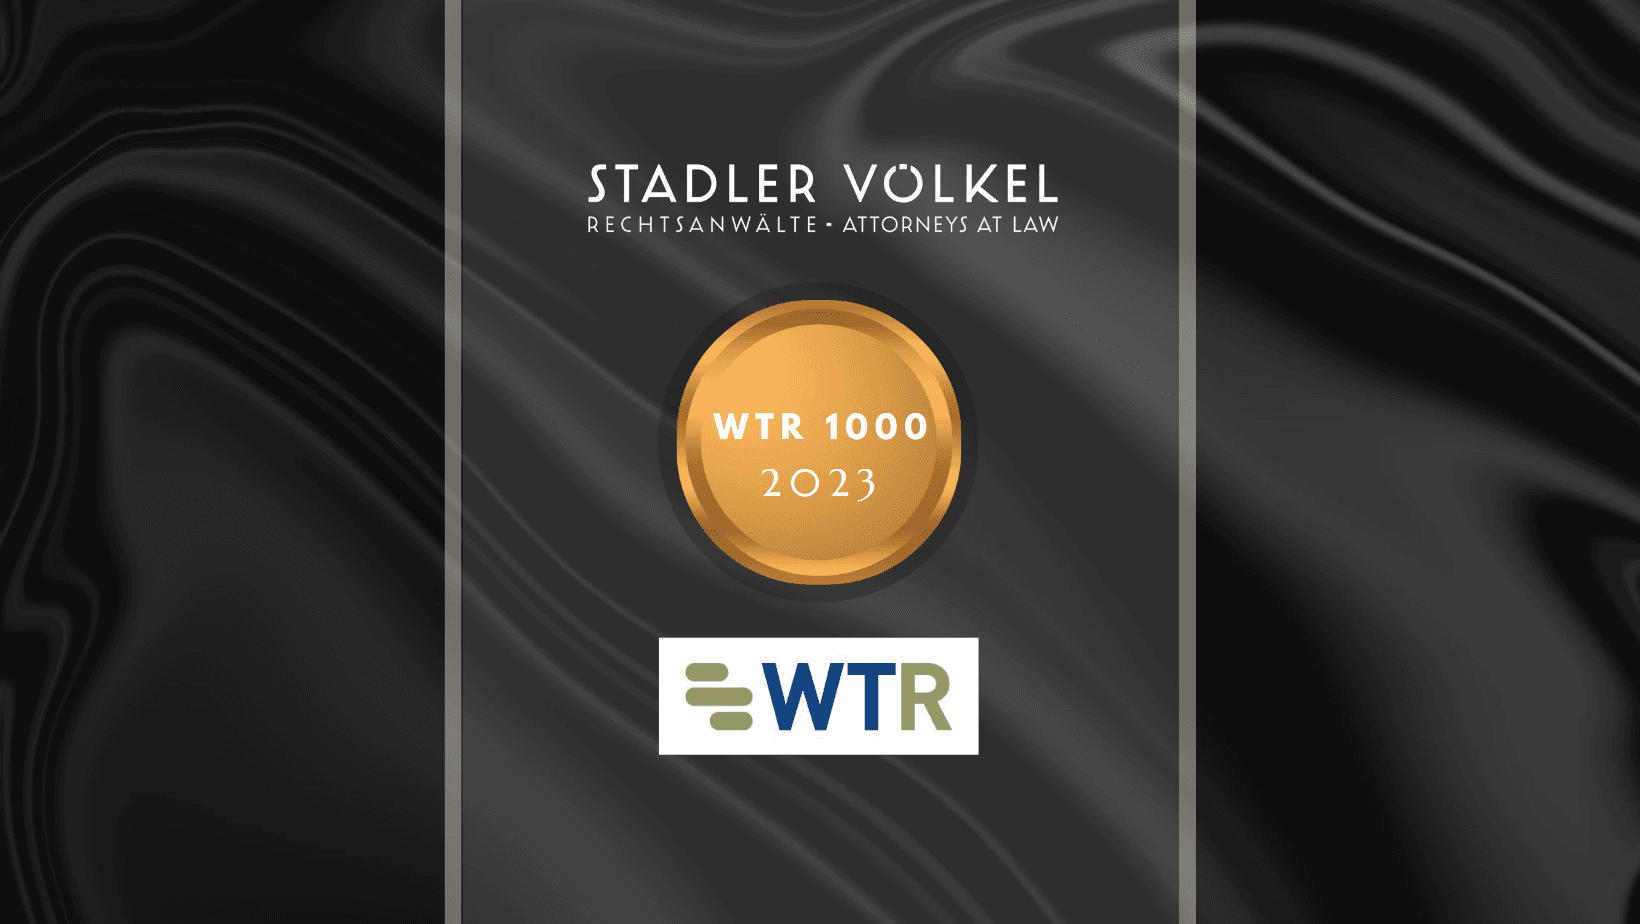 WTR 1000 - 2023 - STADLER VÖLKEL listed as one of the top trademark law firms in Austria (category BRONZE)